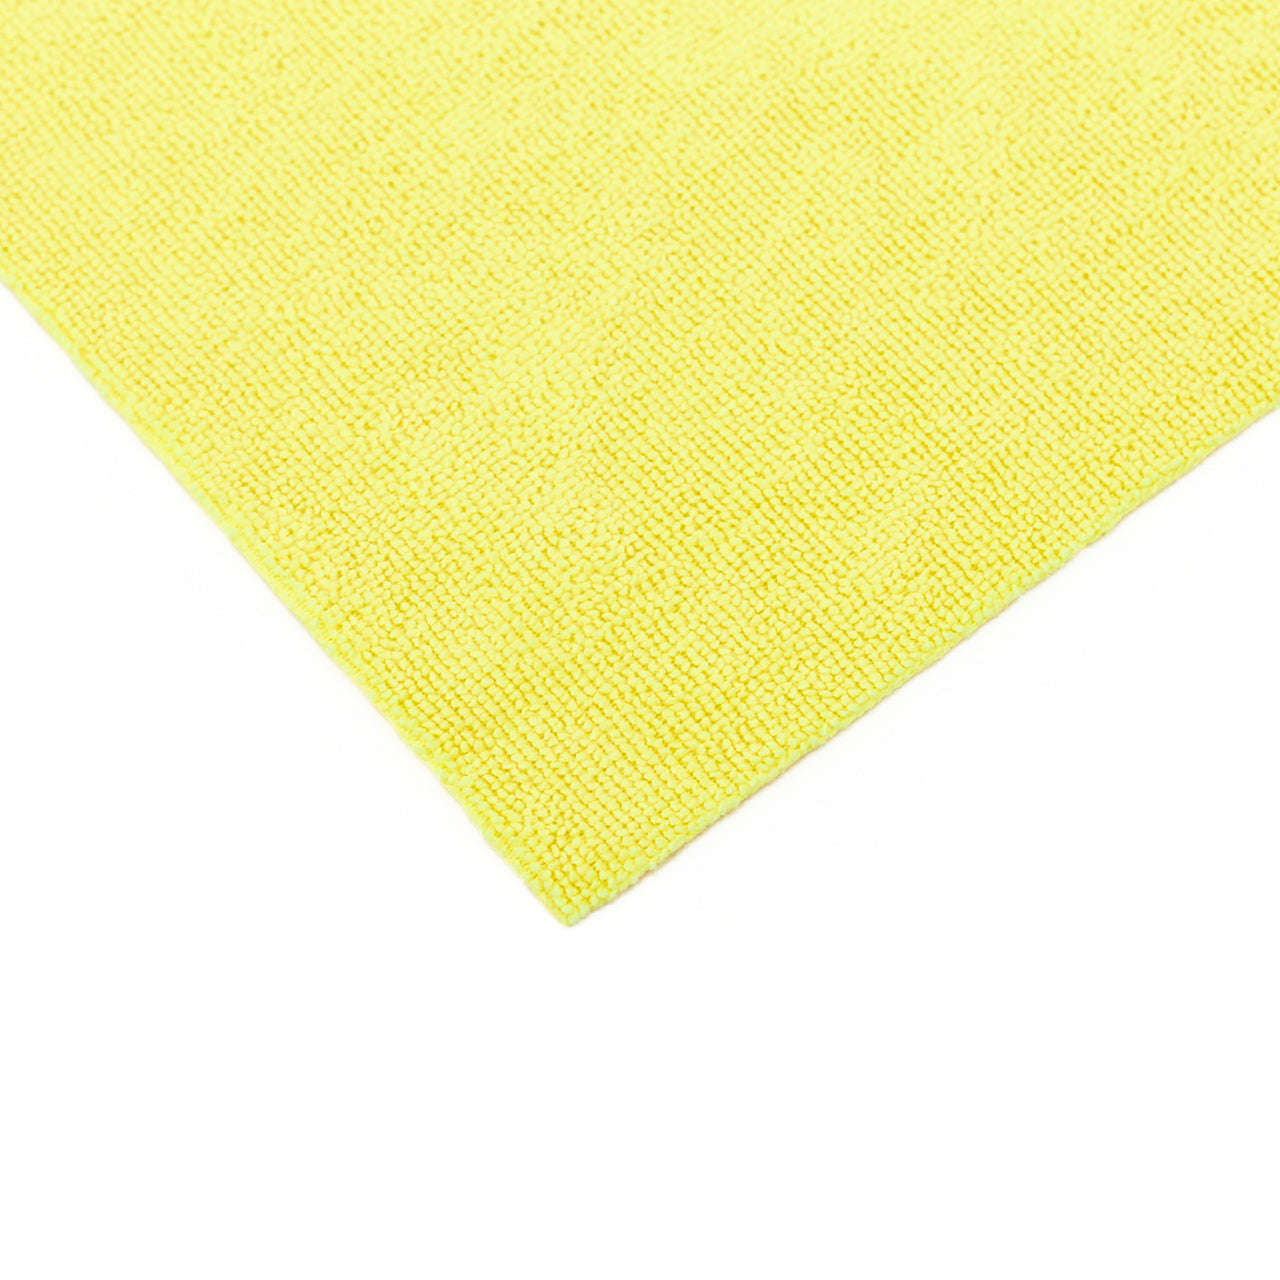 The Rag Company Edgeless 245 All-Purpose 16 x 16 Microfiber Terry Towel - Yellow